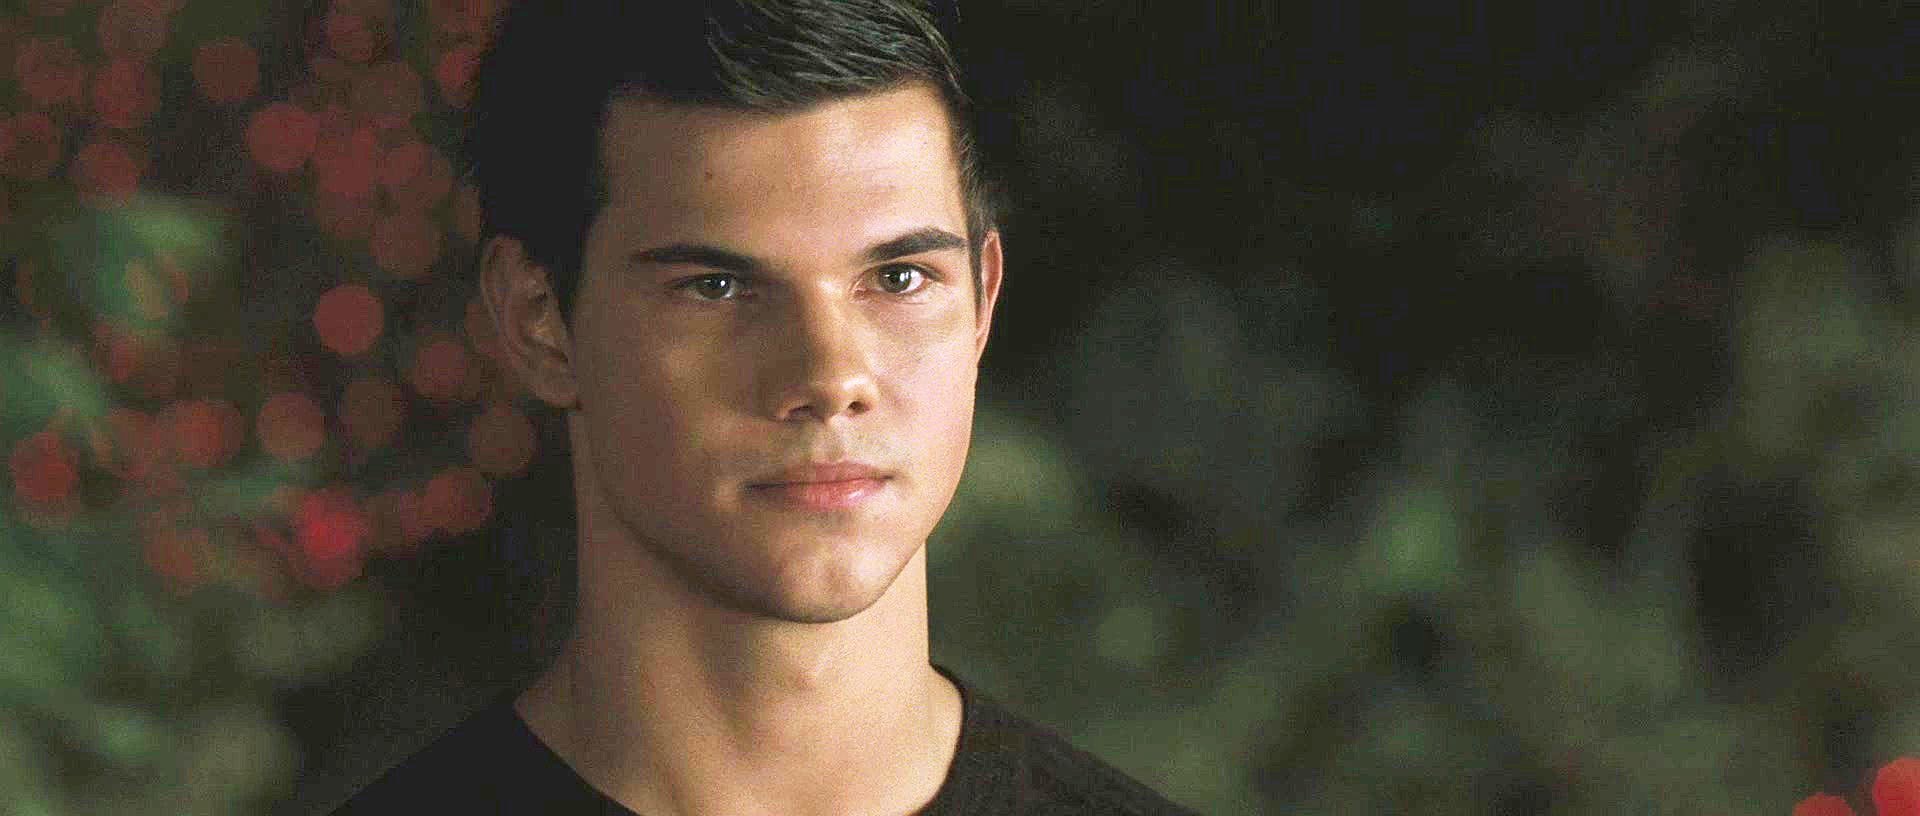 Taylor Lautner as Jacob Black in Summit Entertainment's The Twilight Saga's Eclipse (2010)